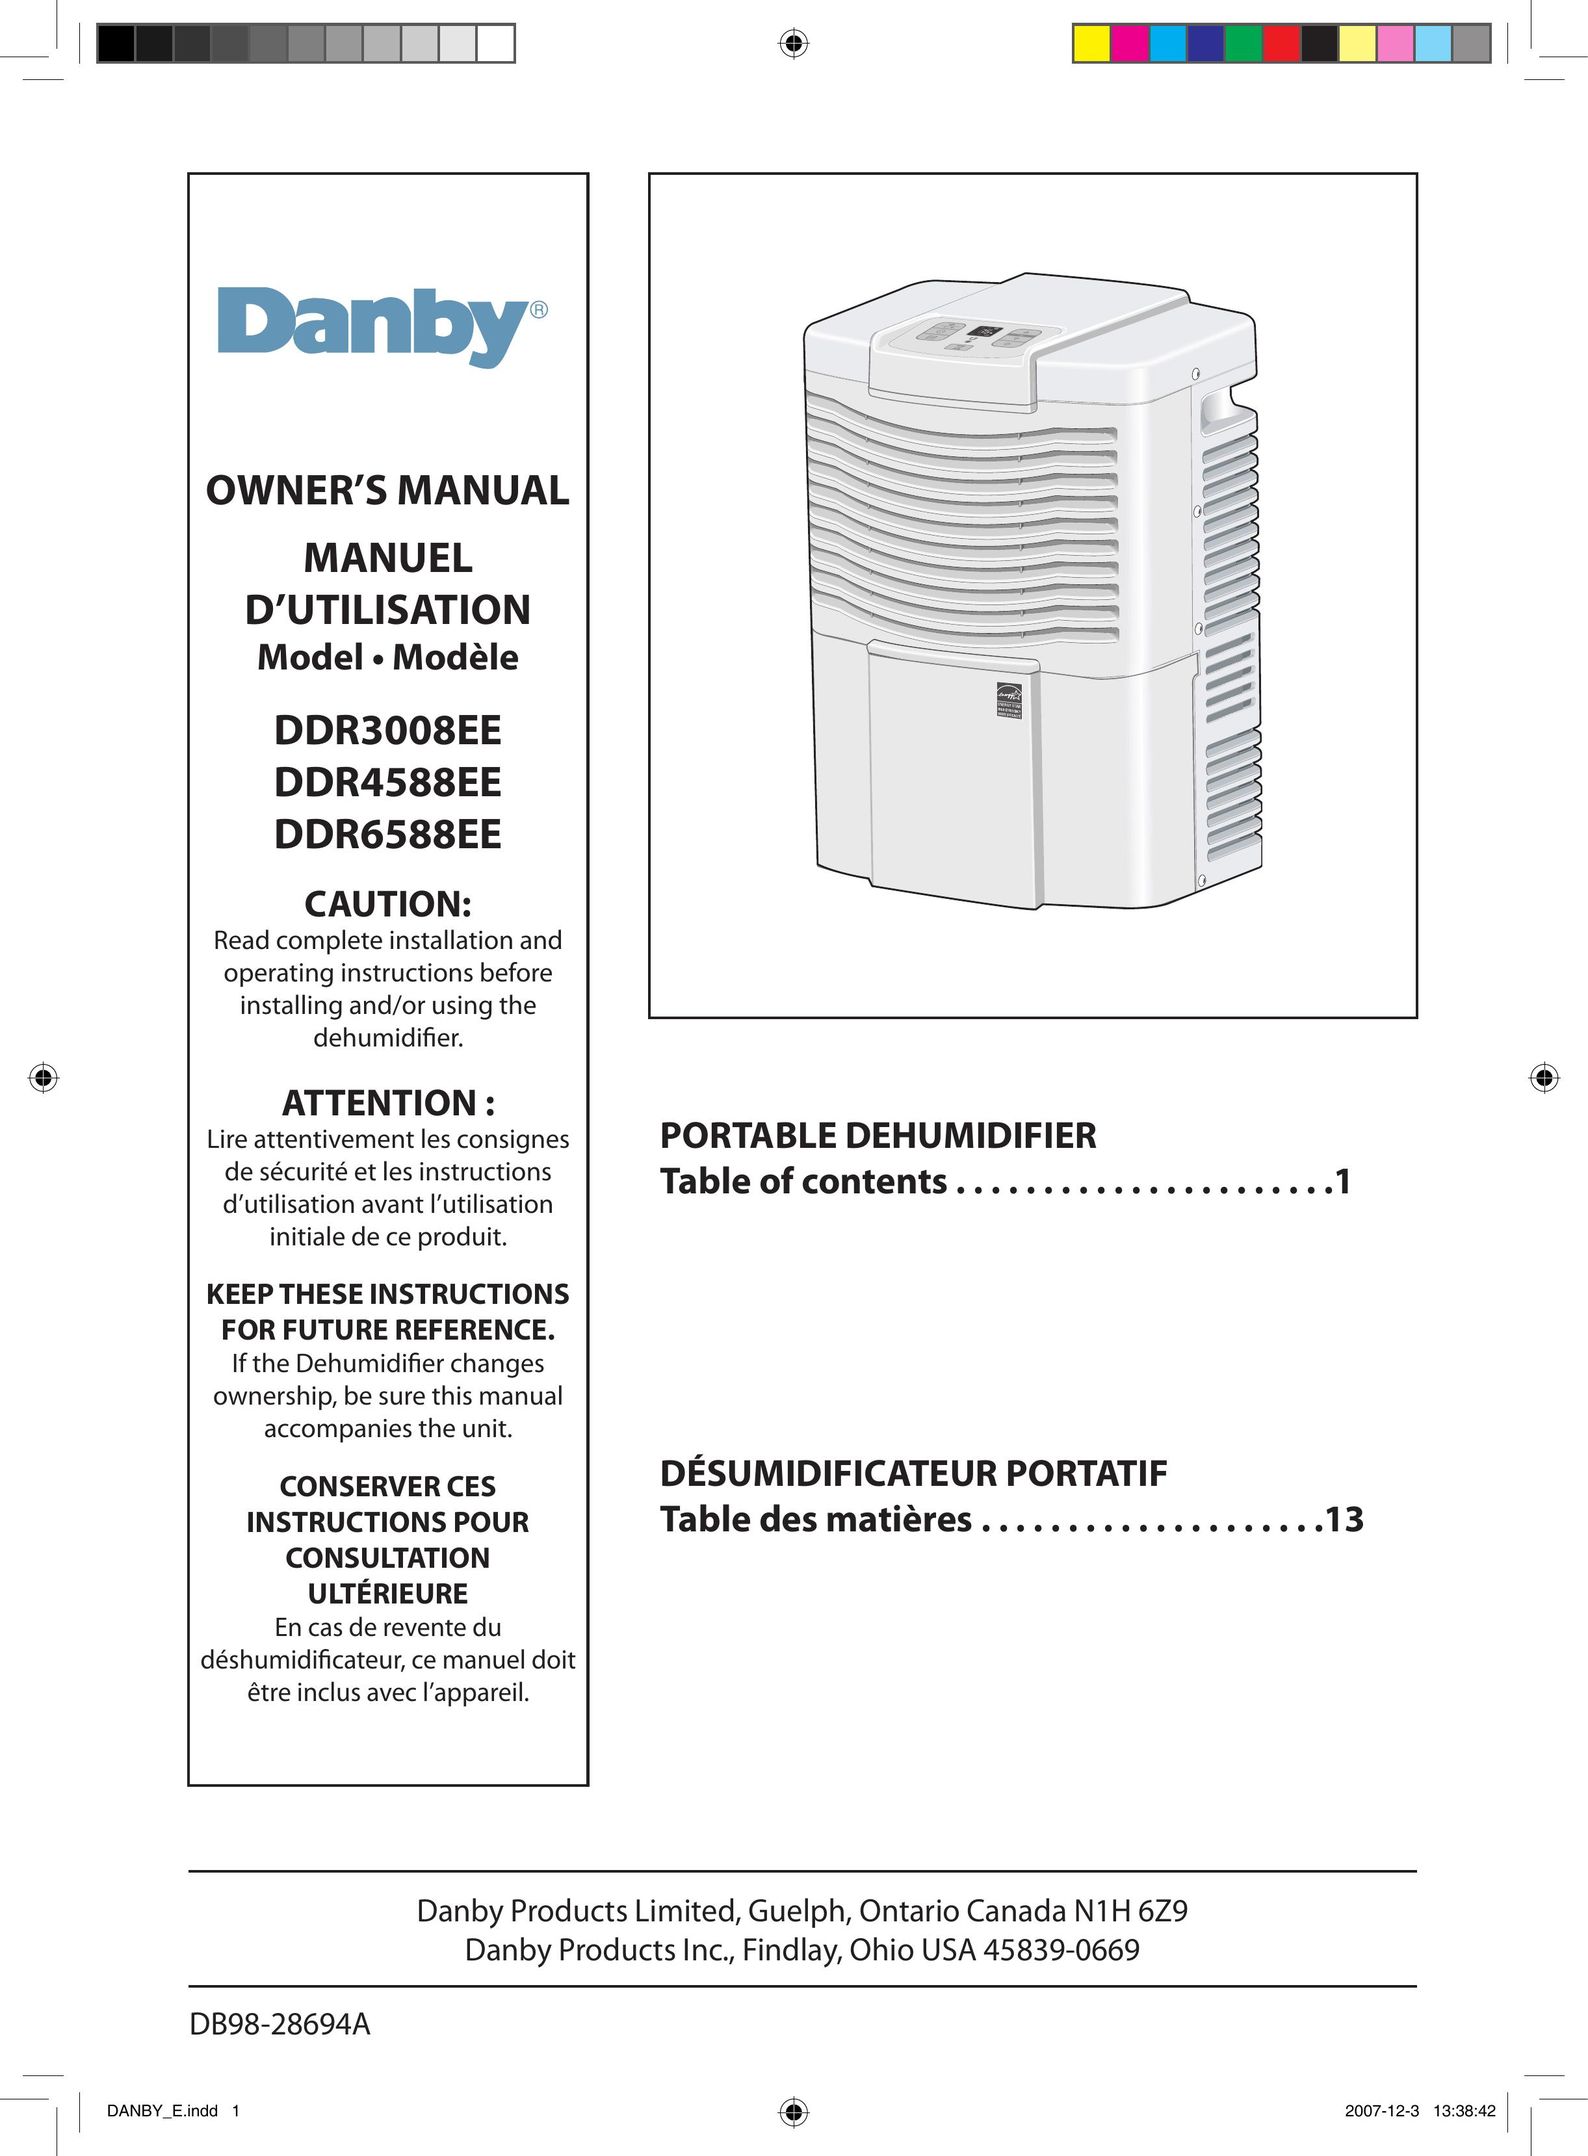 Danby DDR4588EE Dehumidifier User Manual